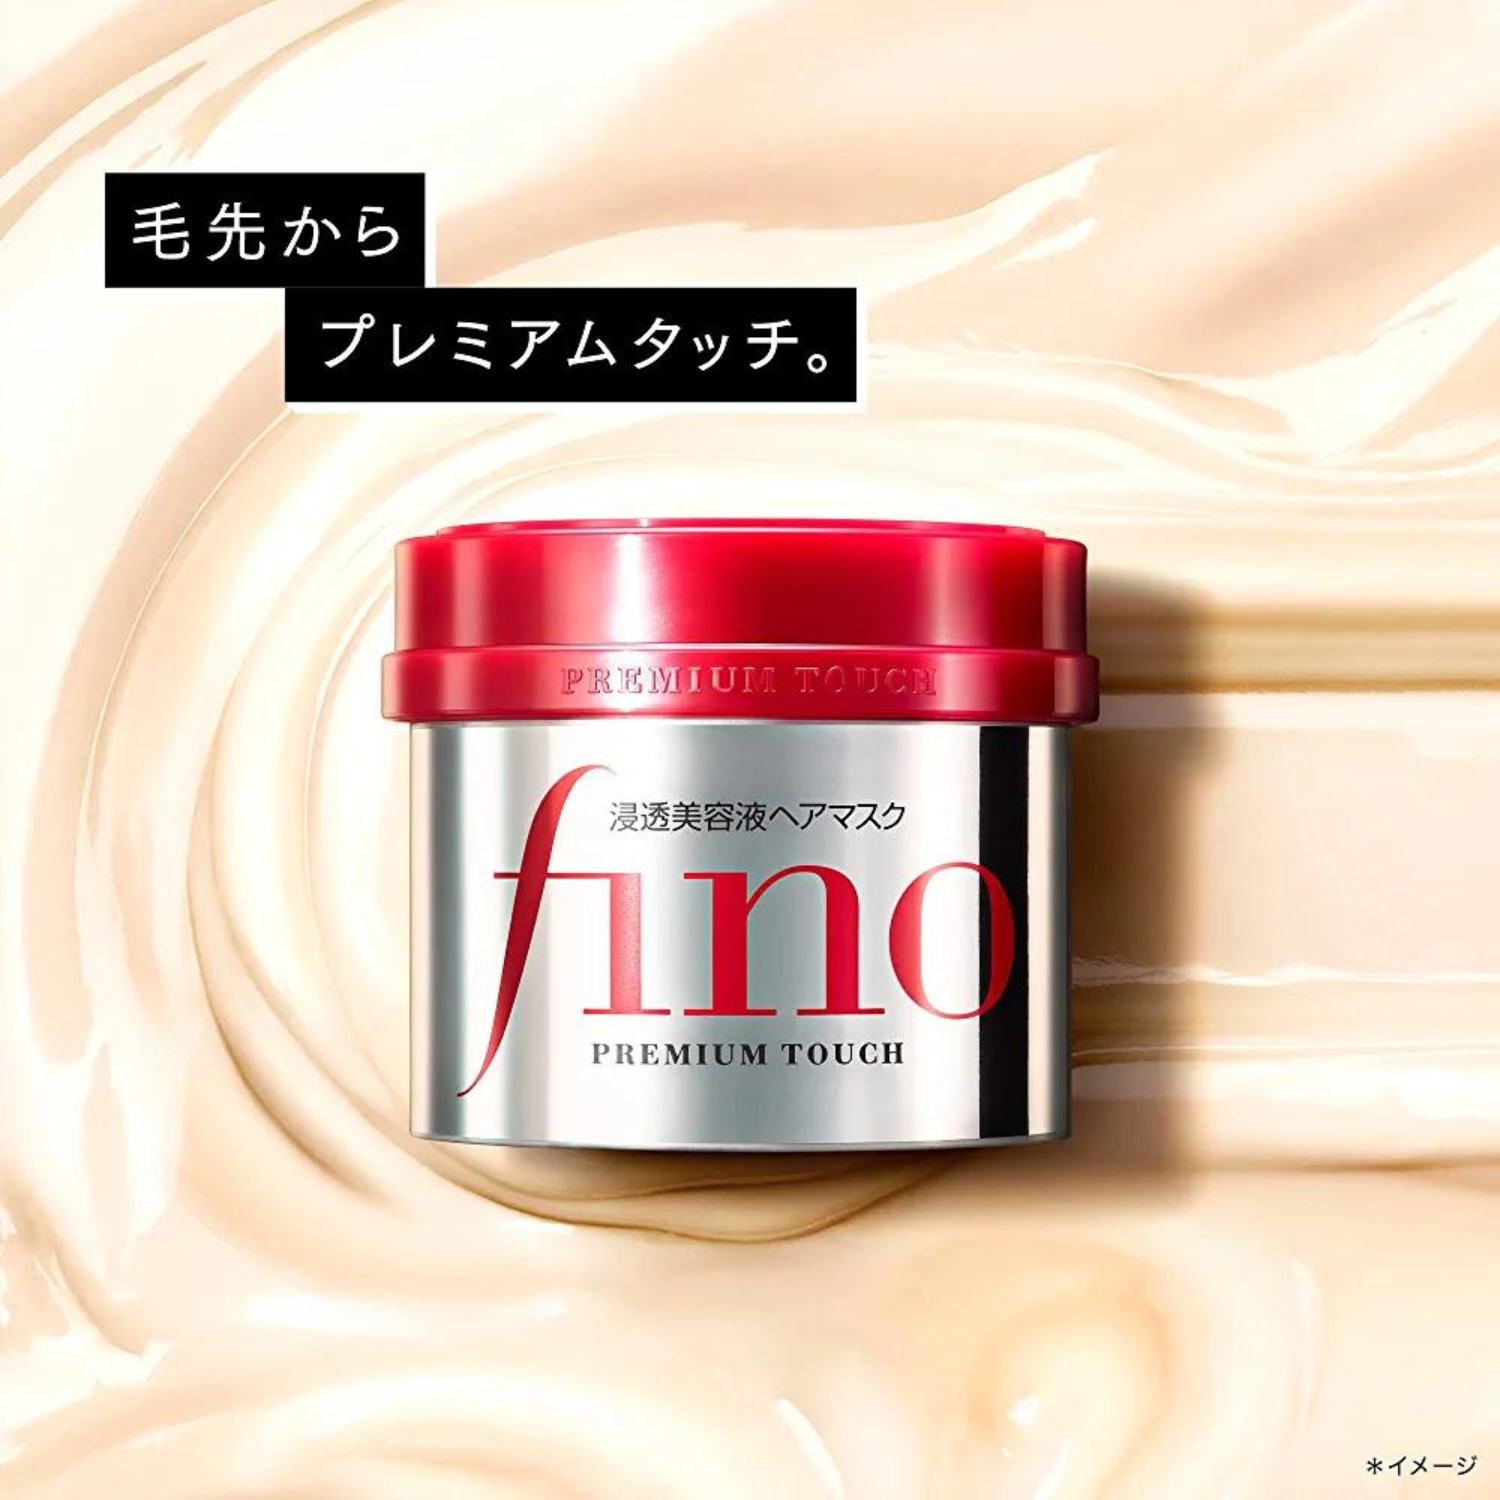 SHISEIDO - Fino Premium Touch Hair Treatment Mask